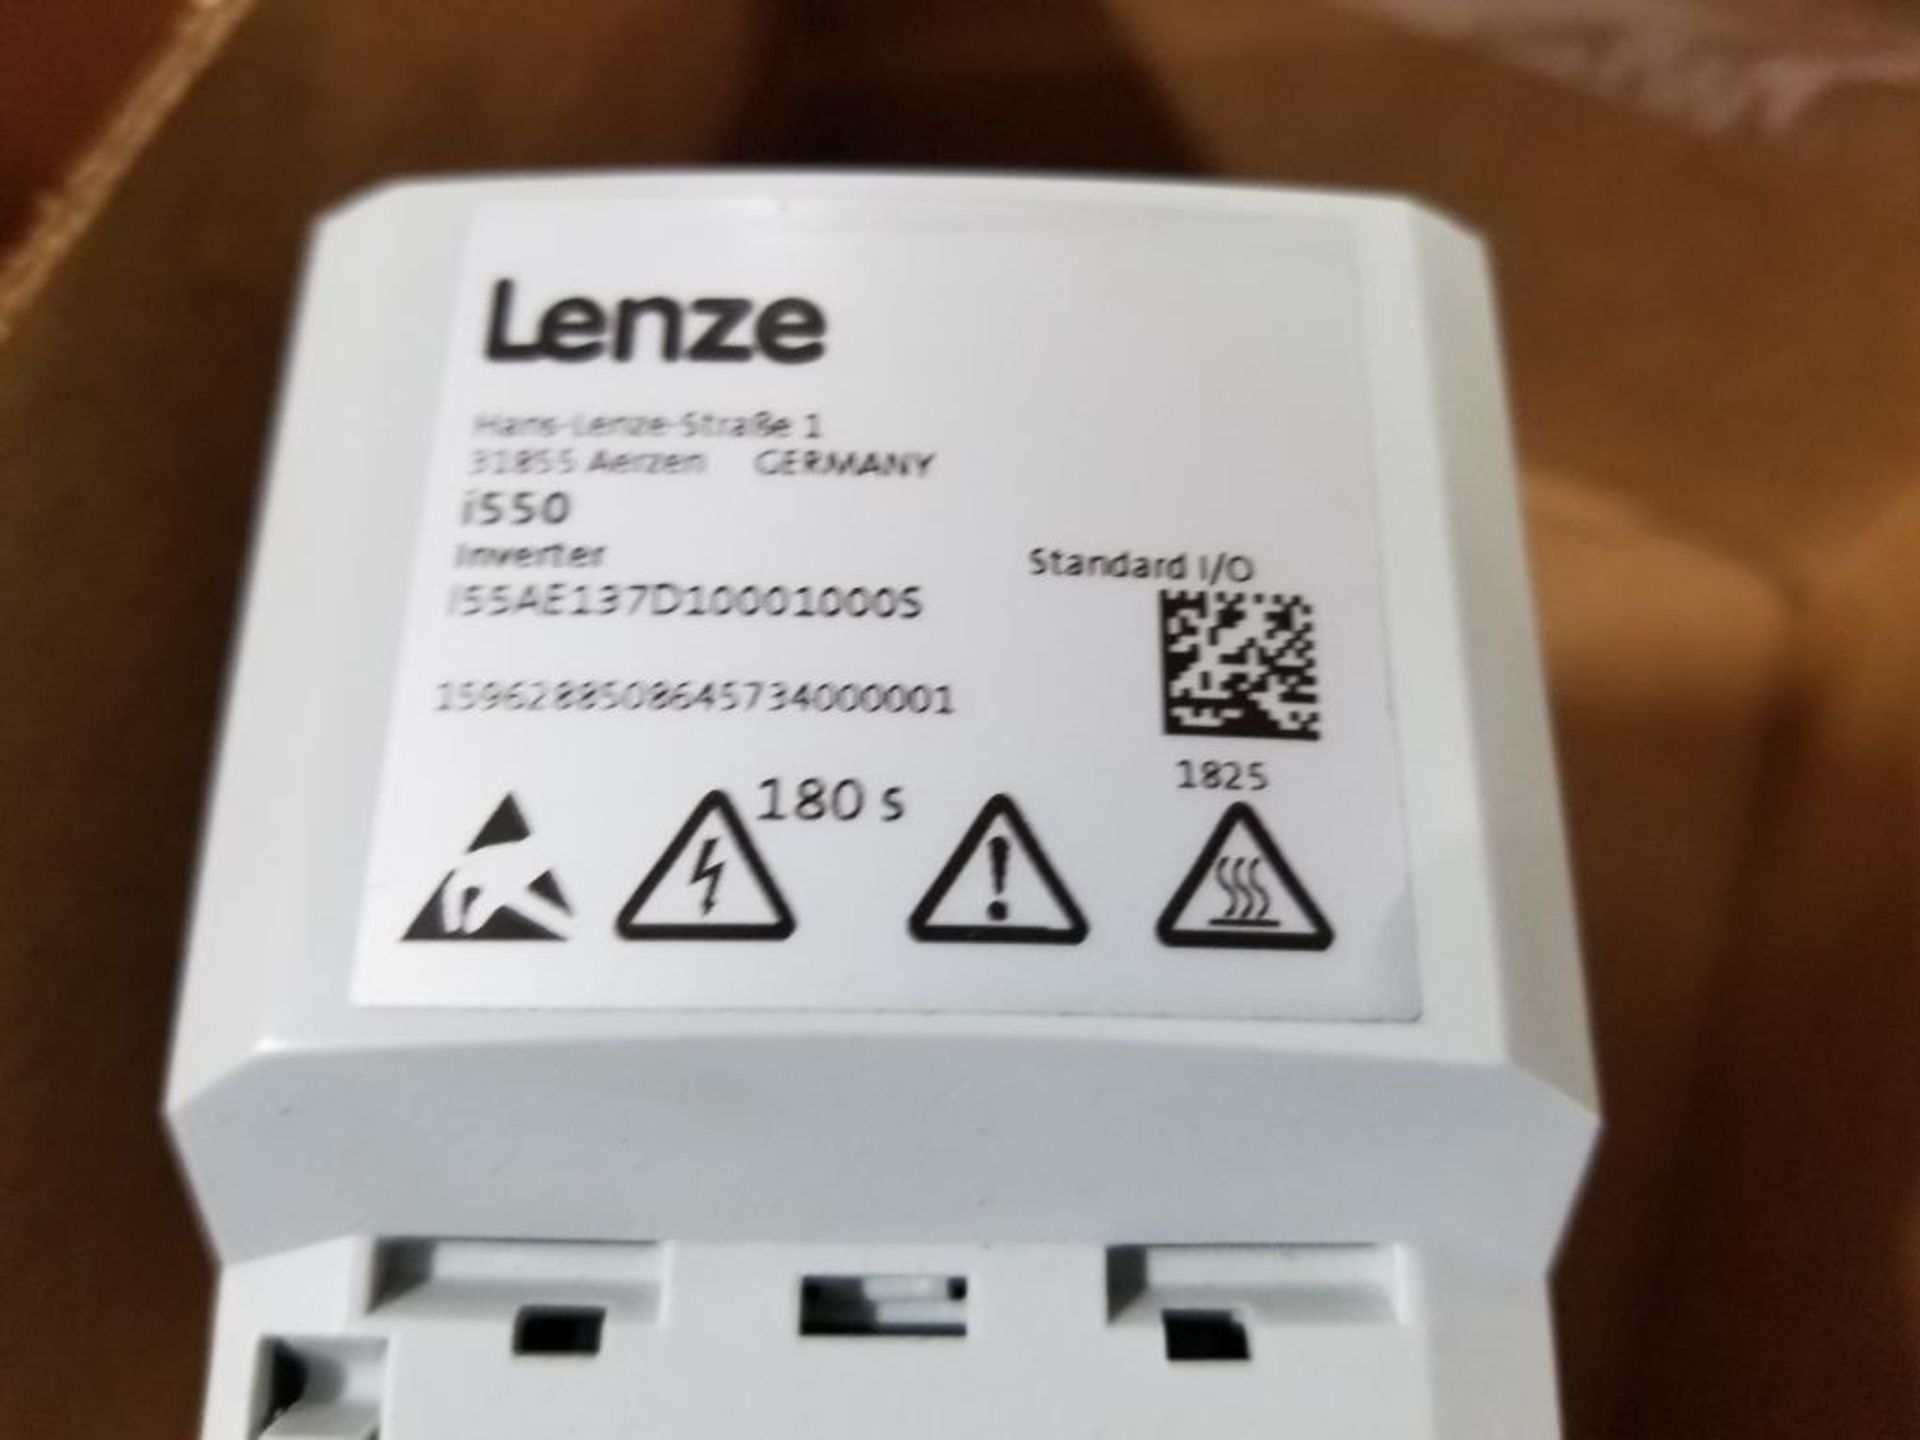 Lenze inverter drive. Model I55AE137D10001000S. New in box. - Image 5 of 6